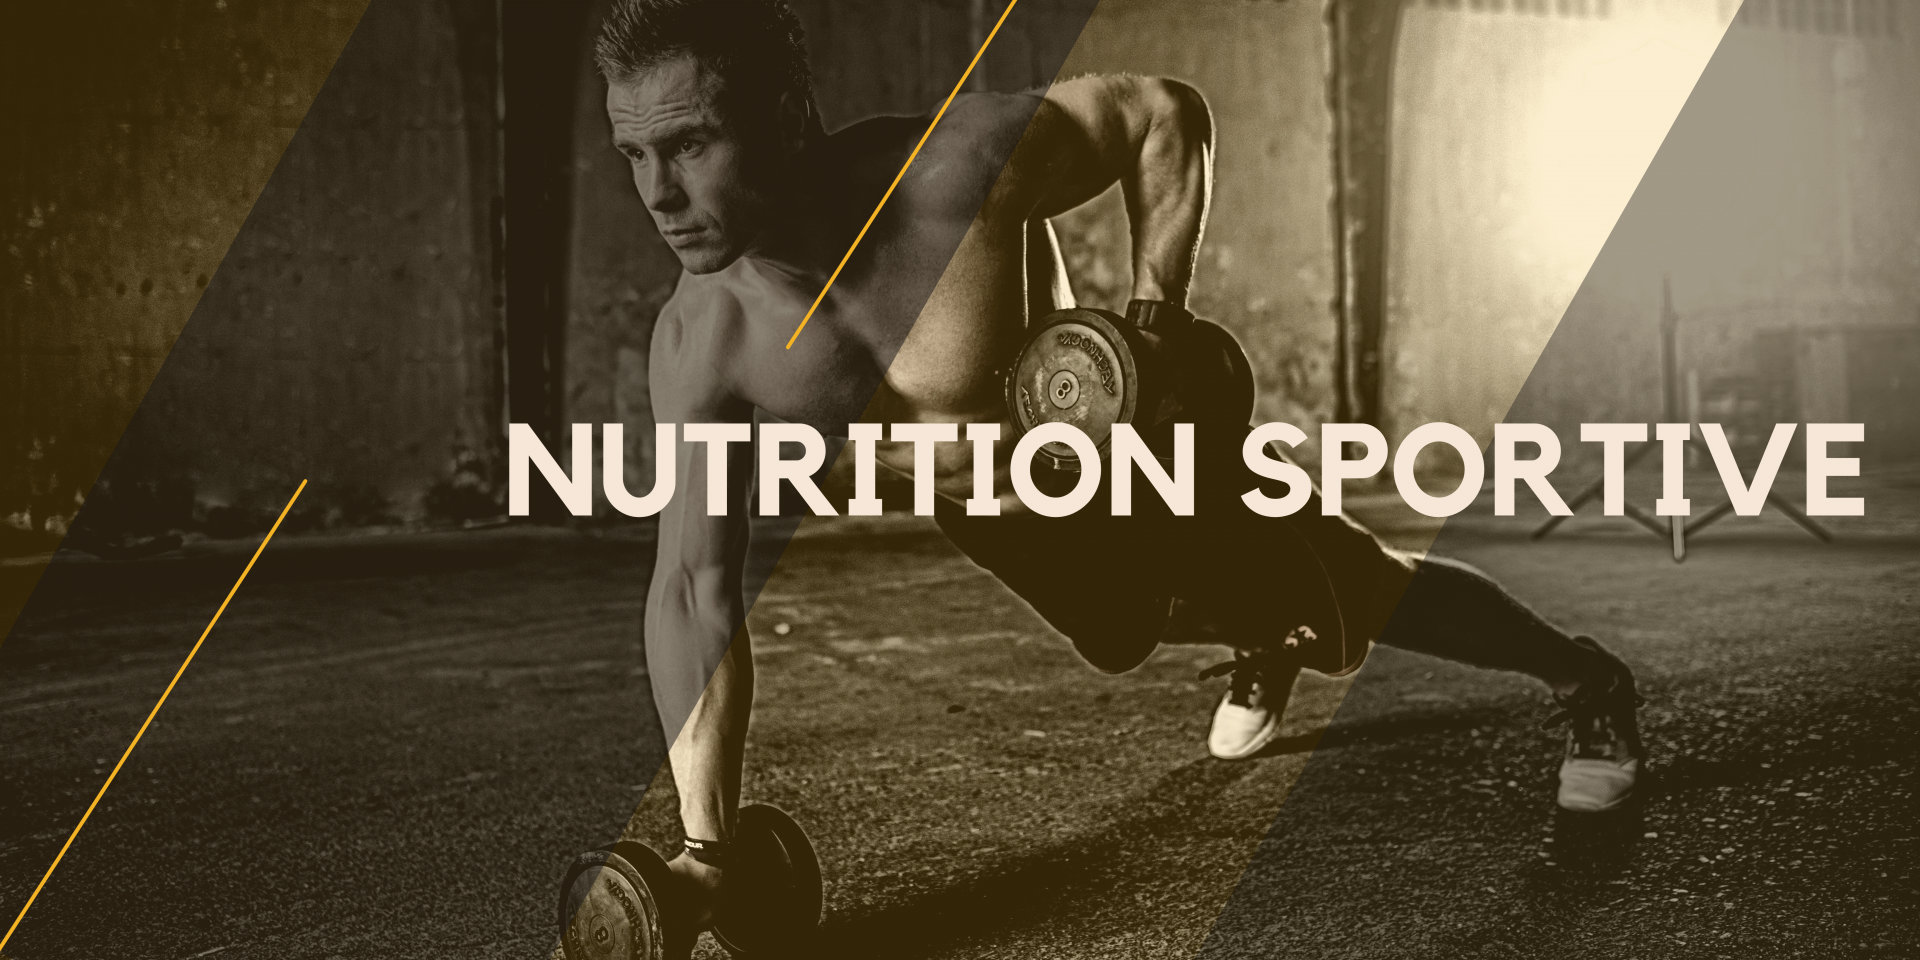 Nutrition sportive